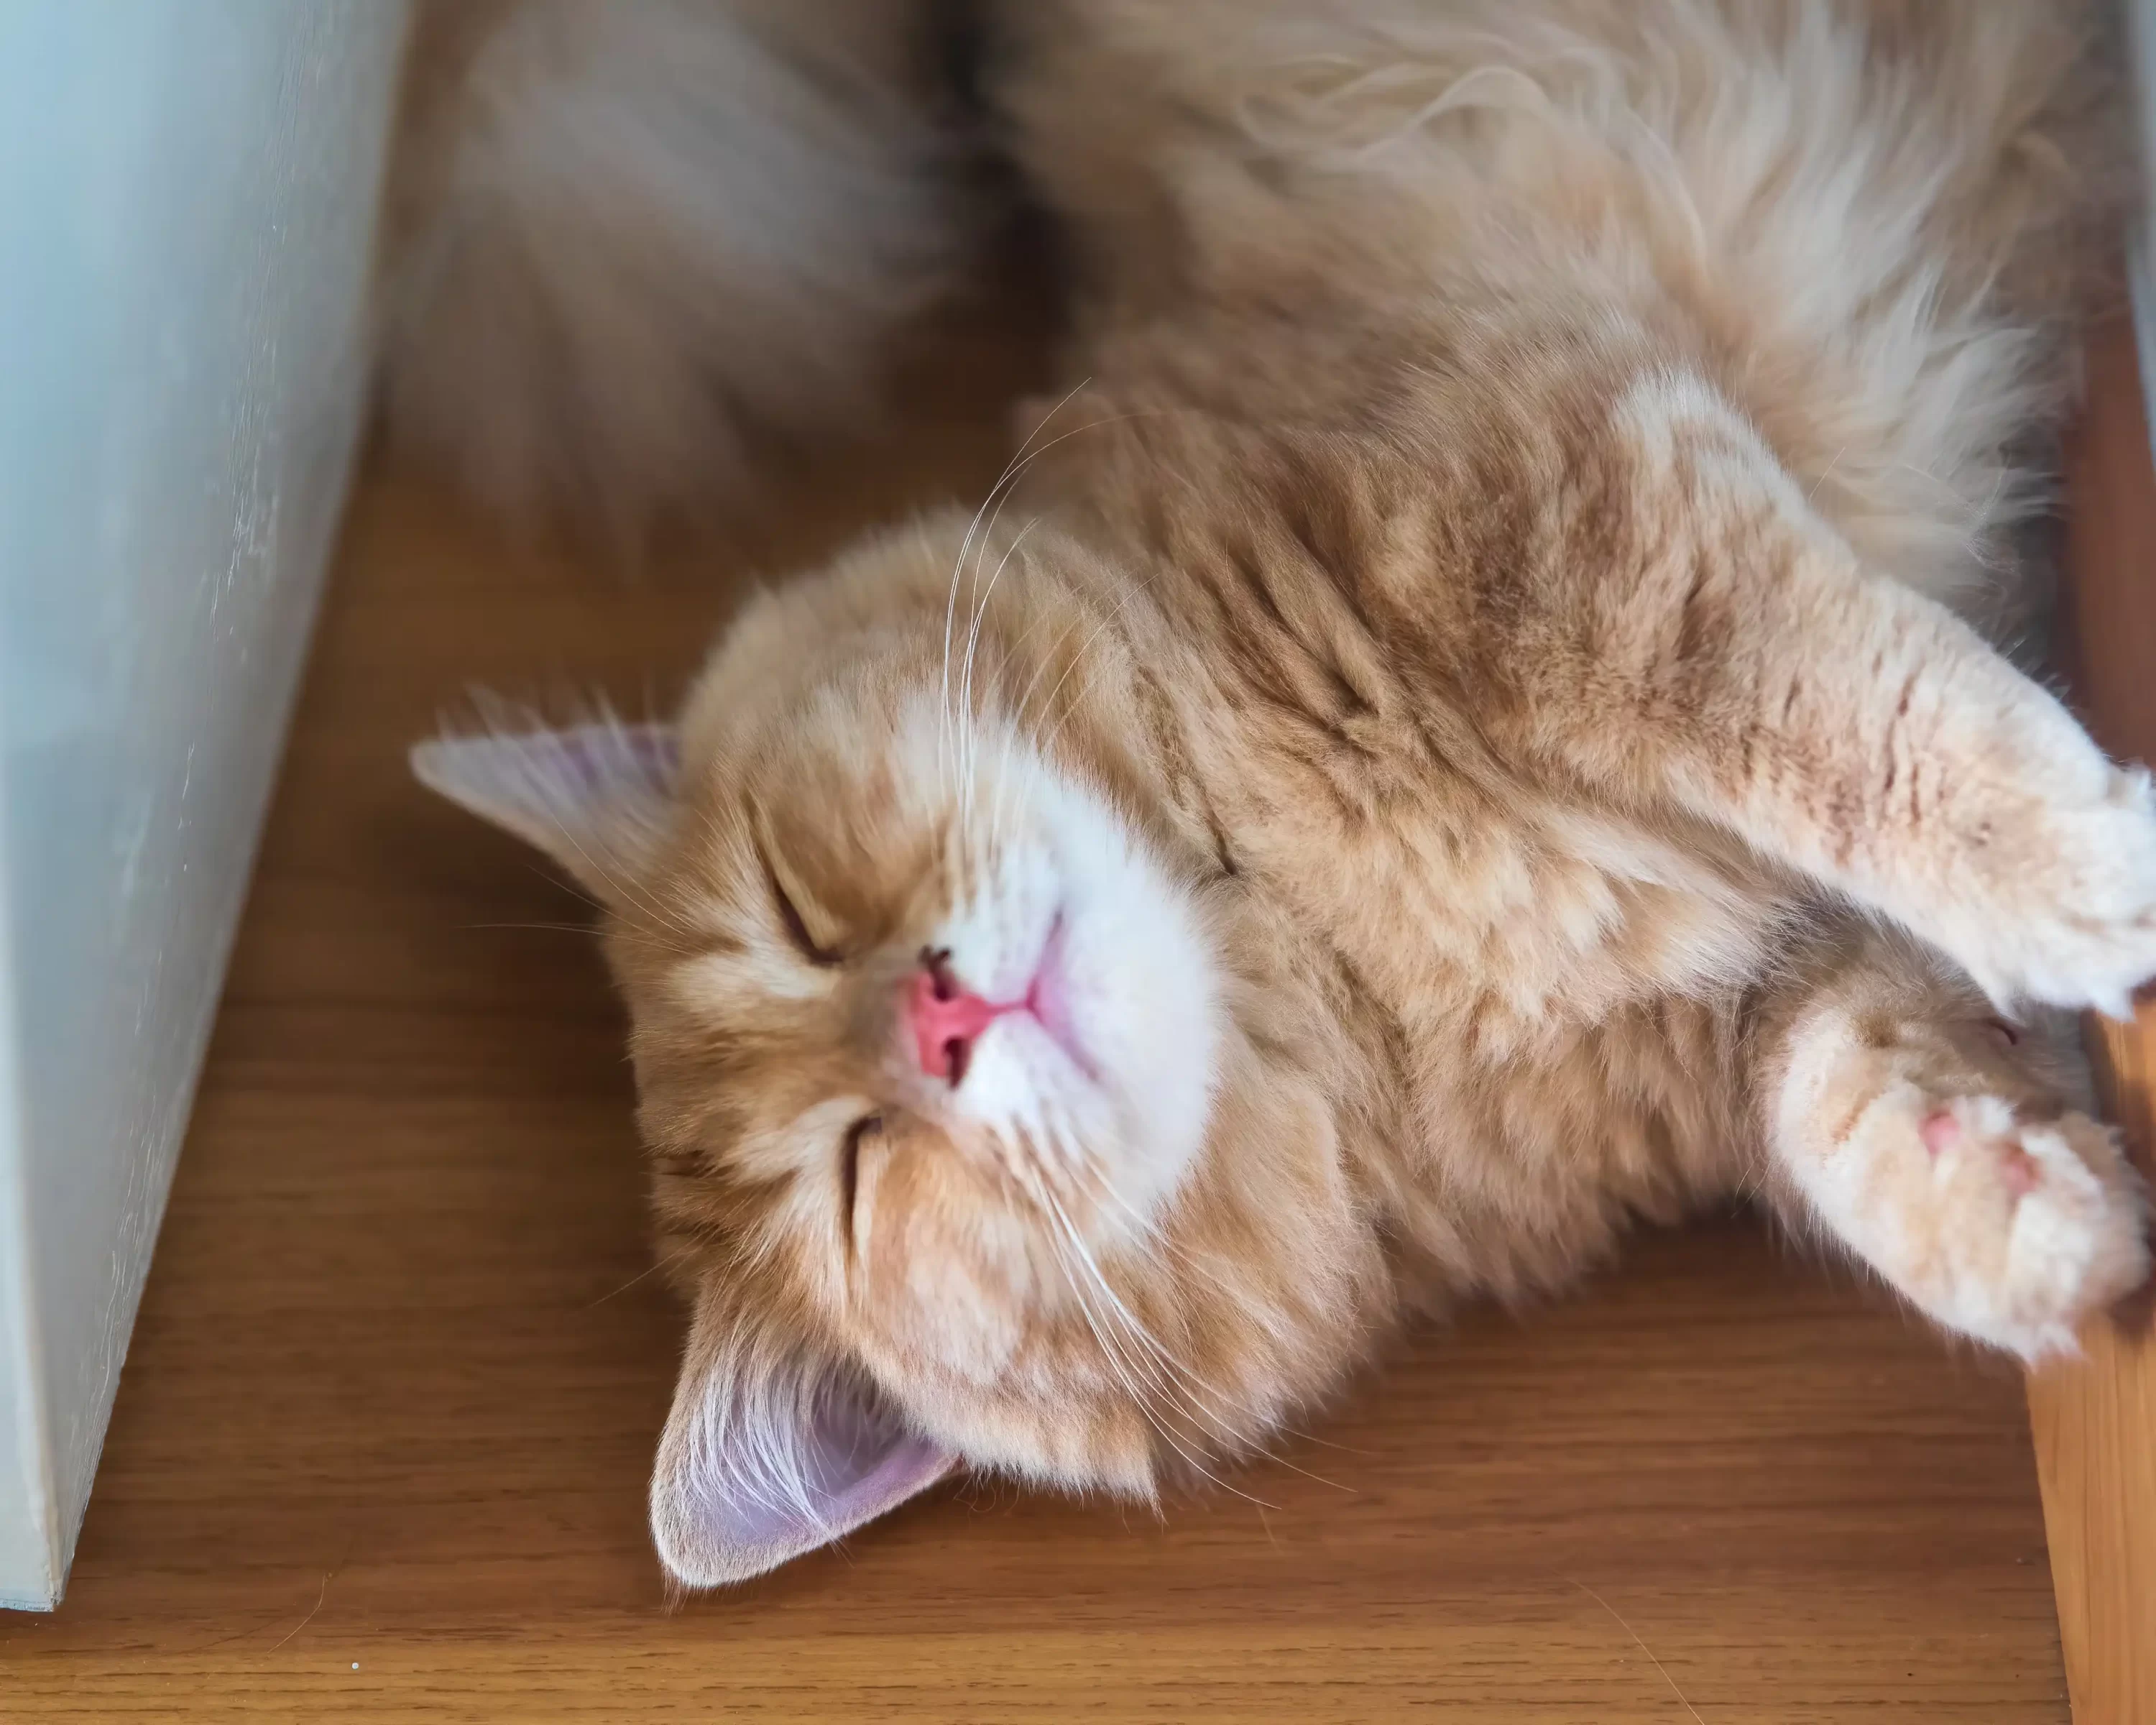 Sleeping munchkin cat